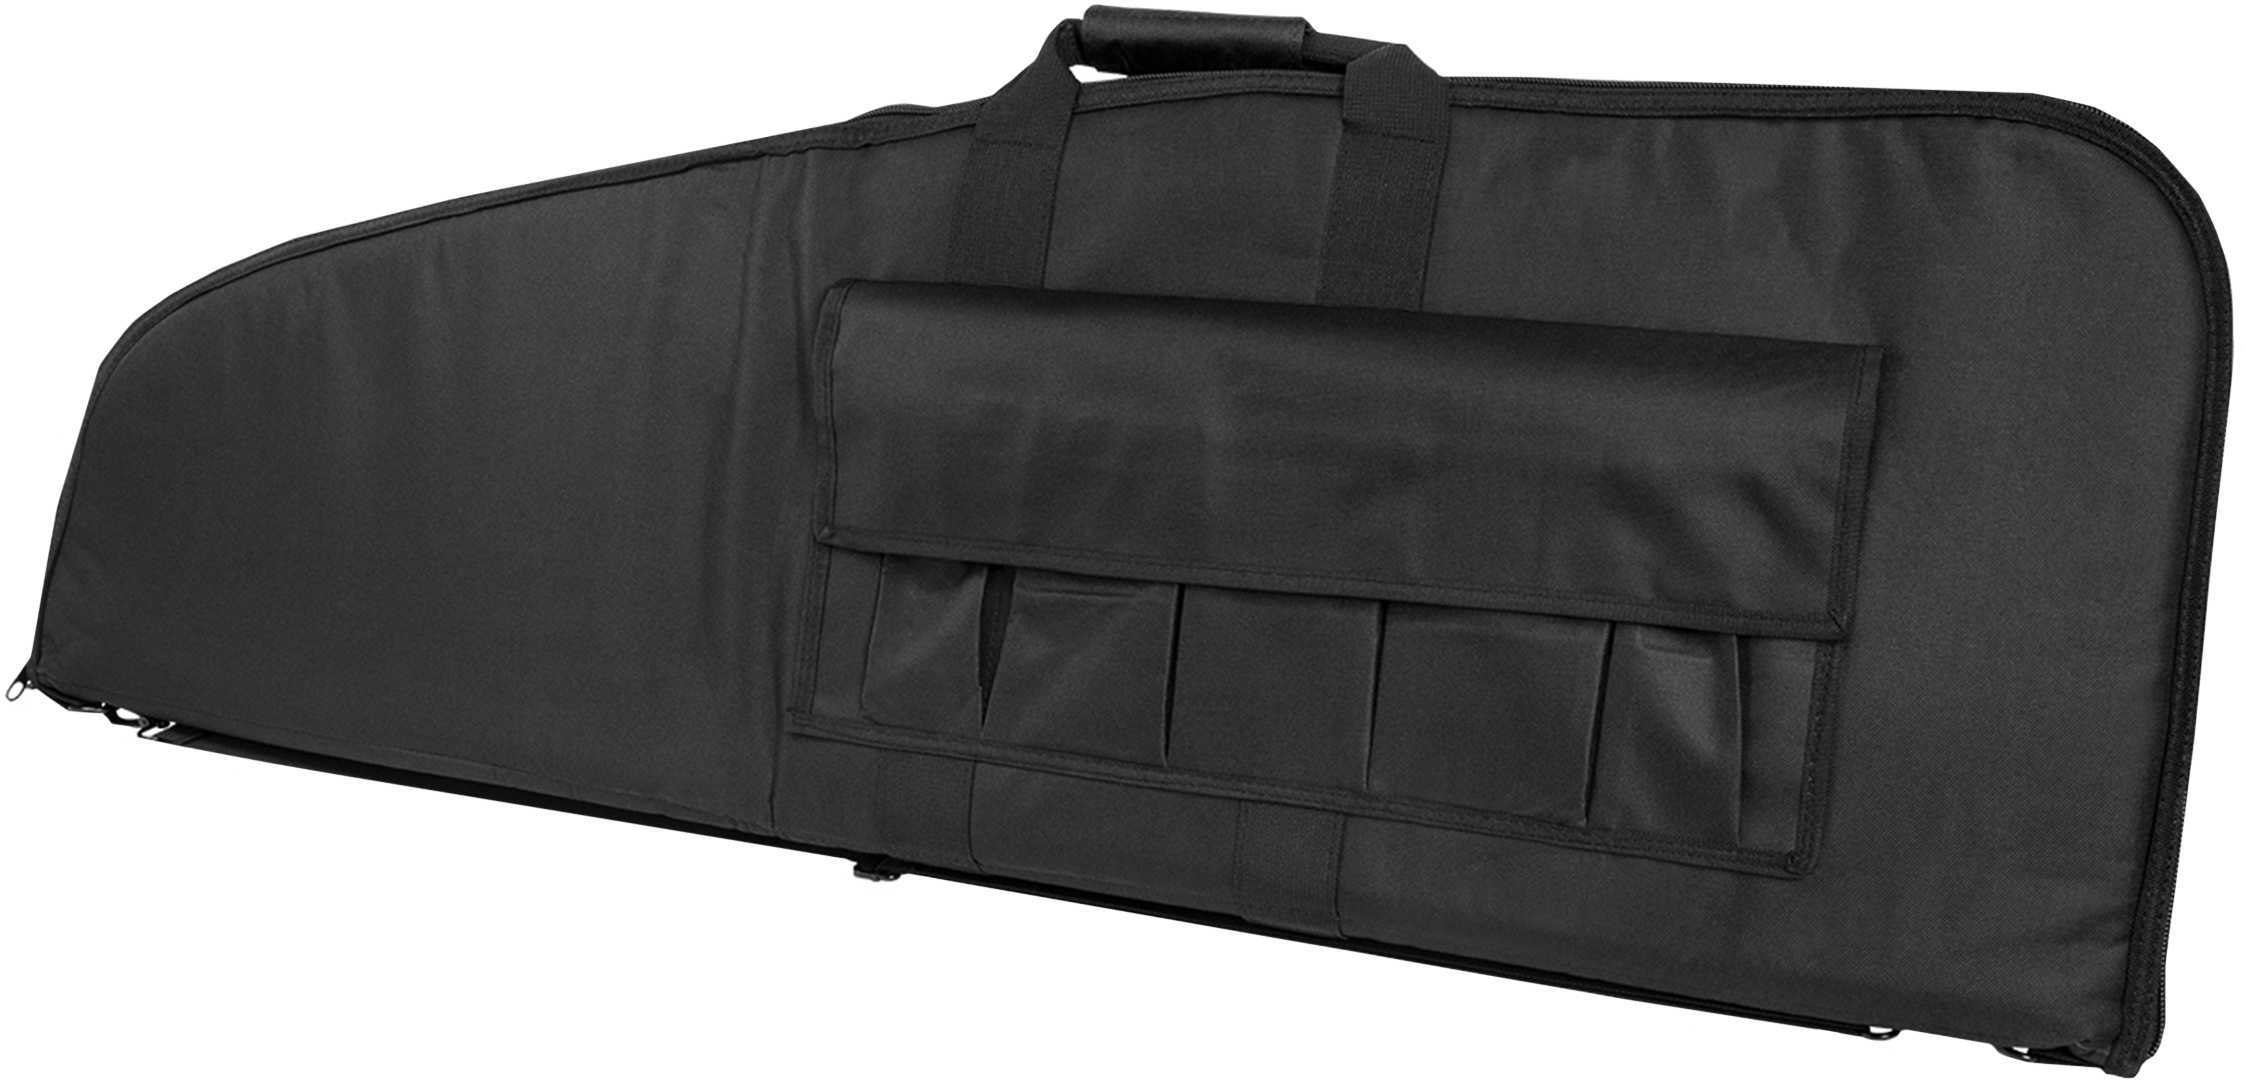 NcStar Scoped Gun Case, Black (52"L x 16"H) CVS2907-52